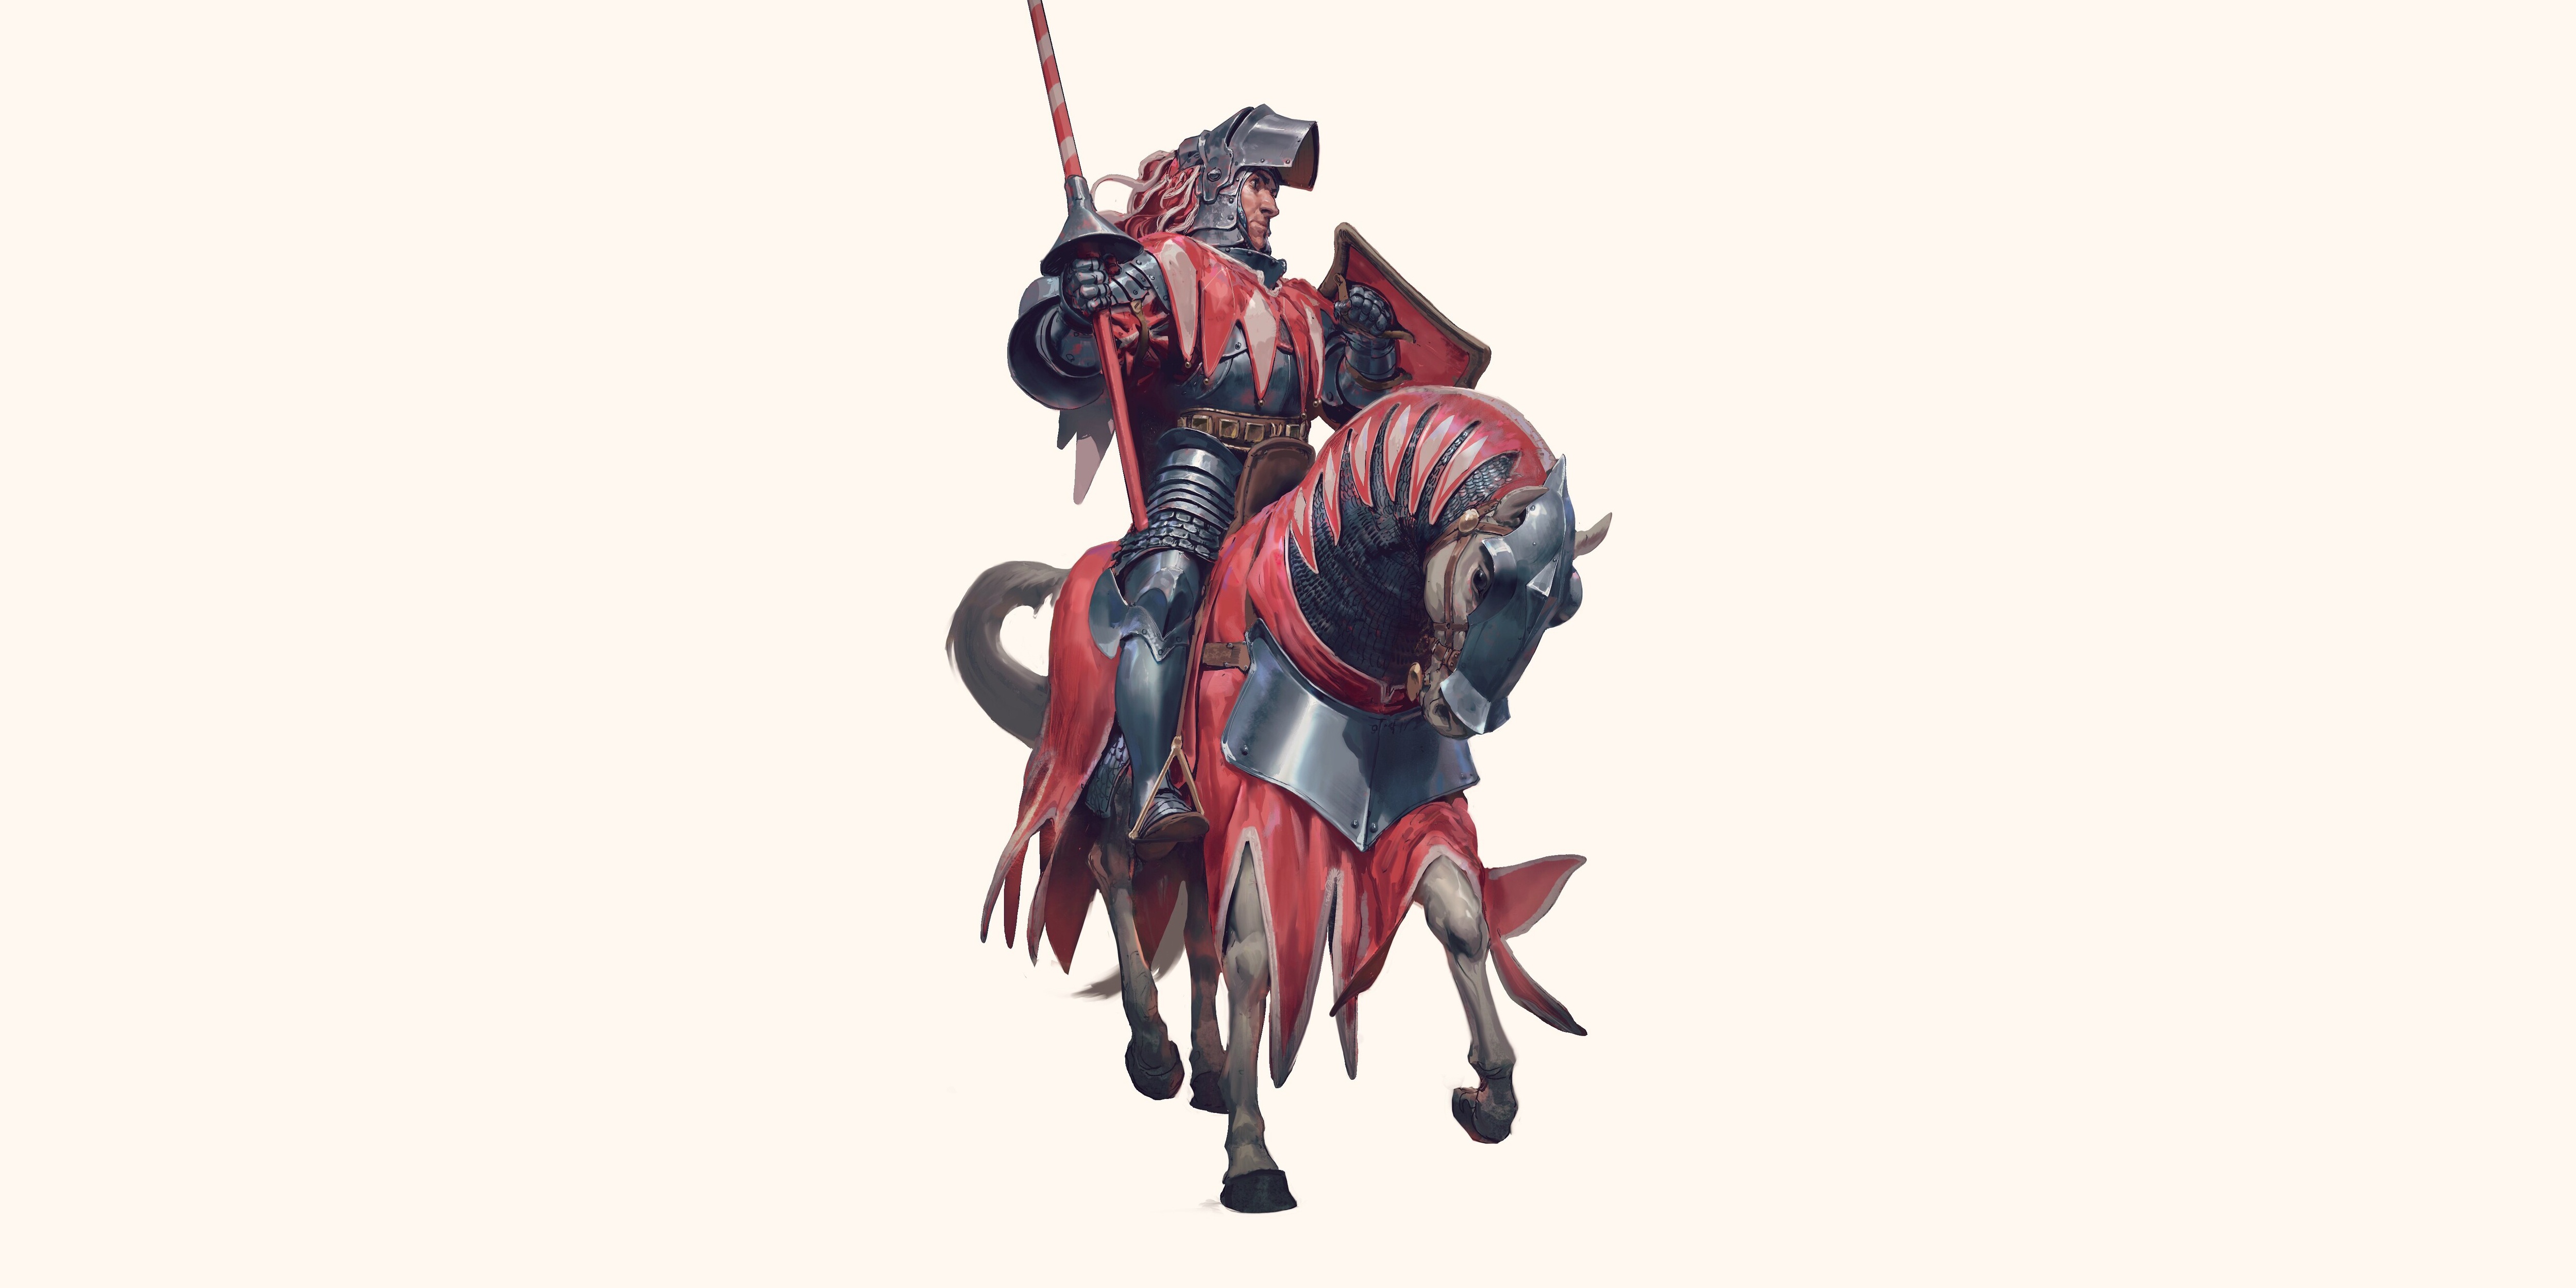 General 5000x2500 simple background knight fantasy art horse armor men